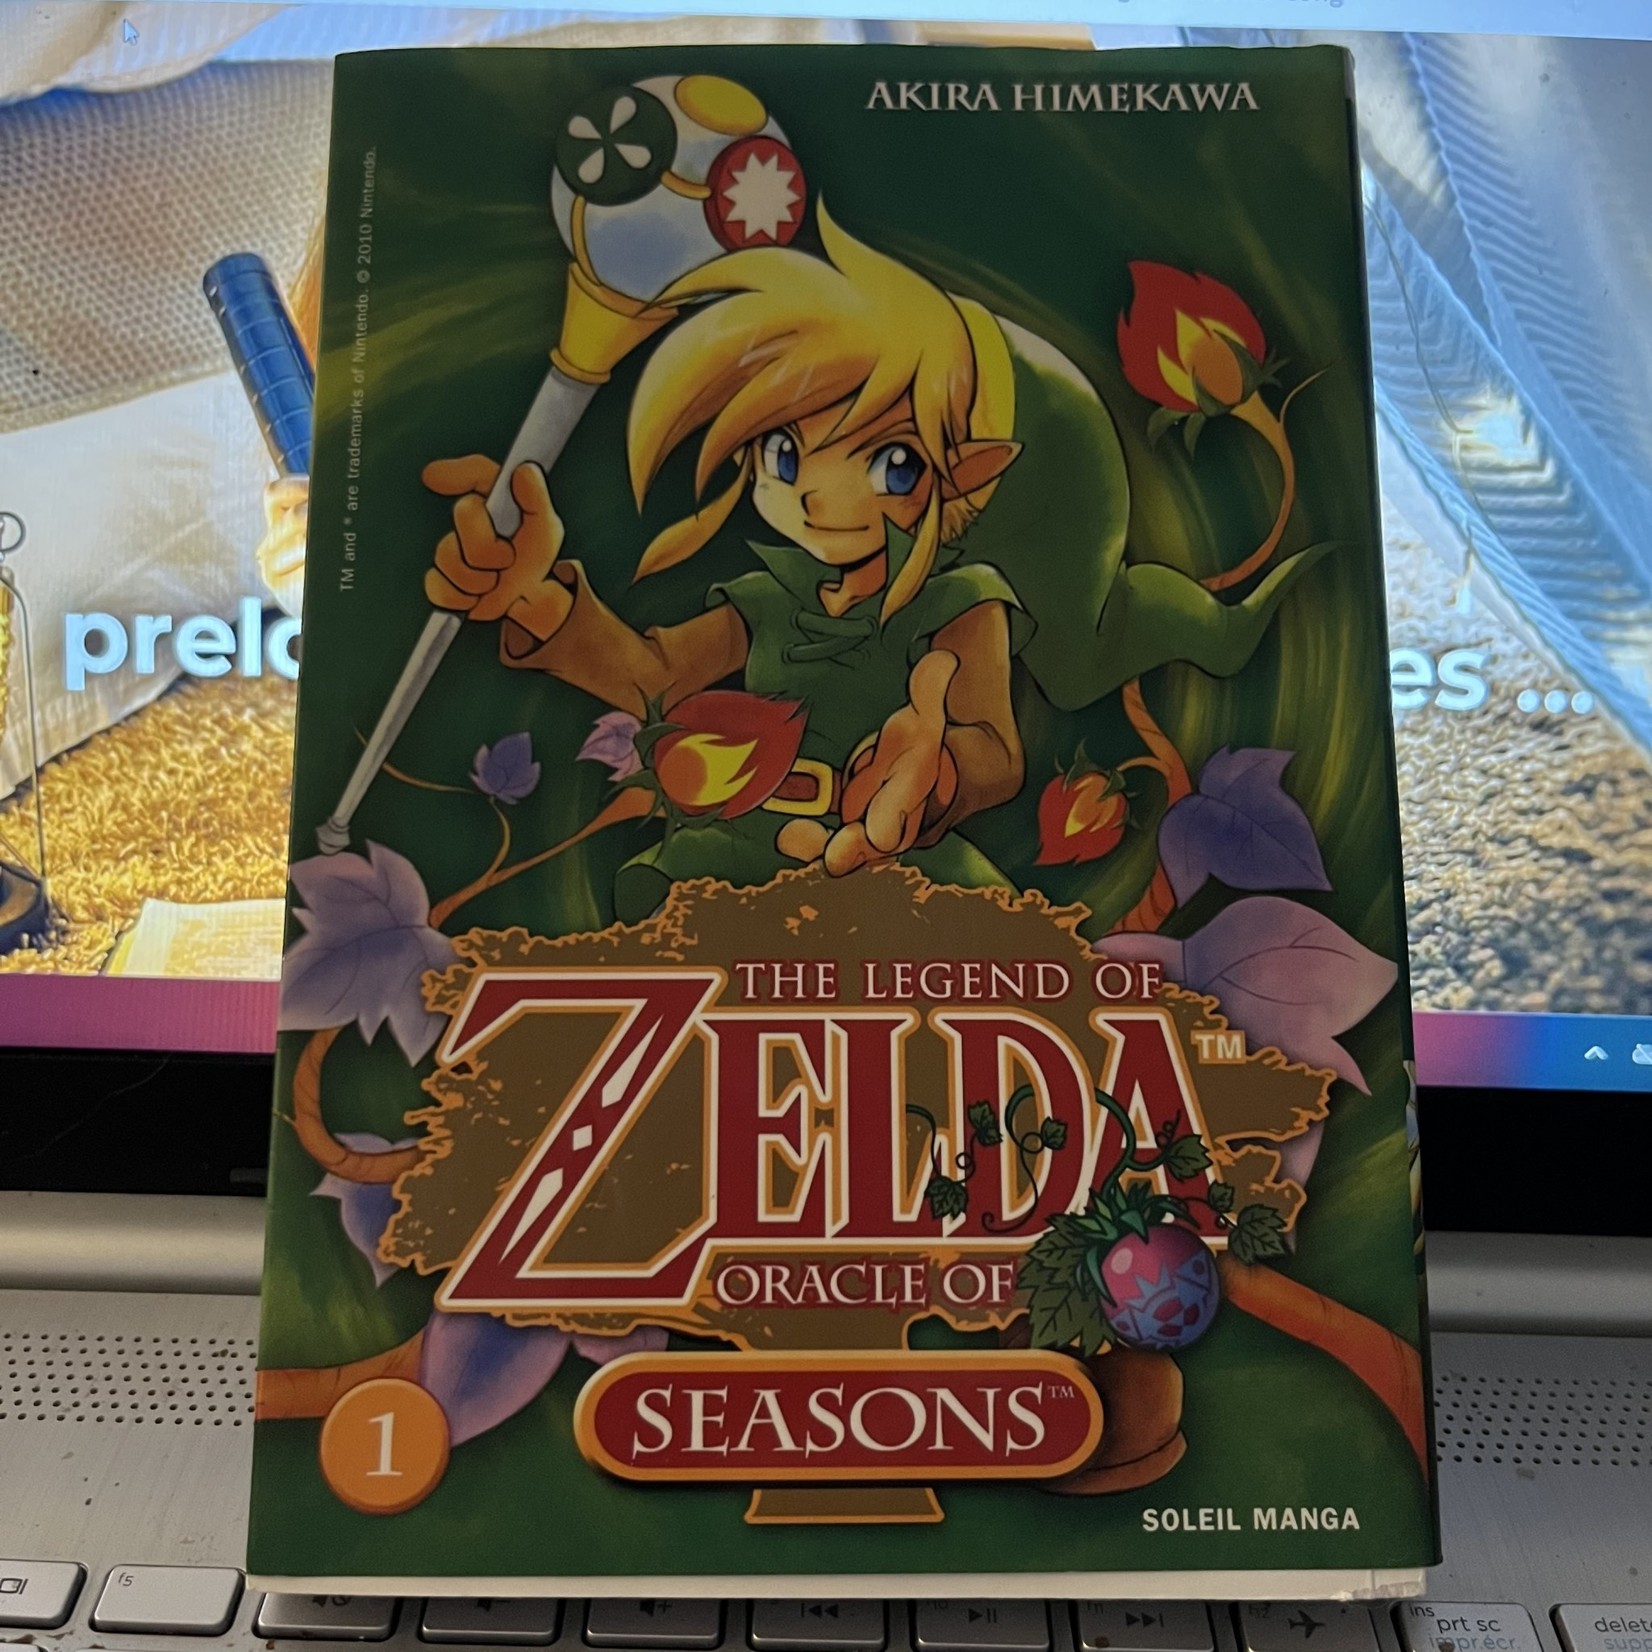 The Legend of Zelda - Oracle of Seasons (French Manga)